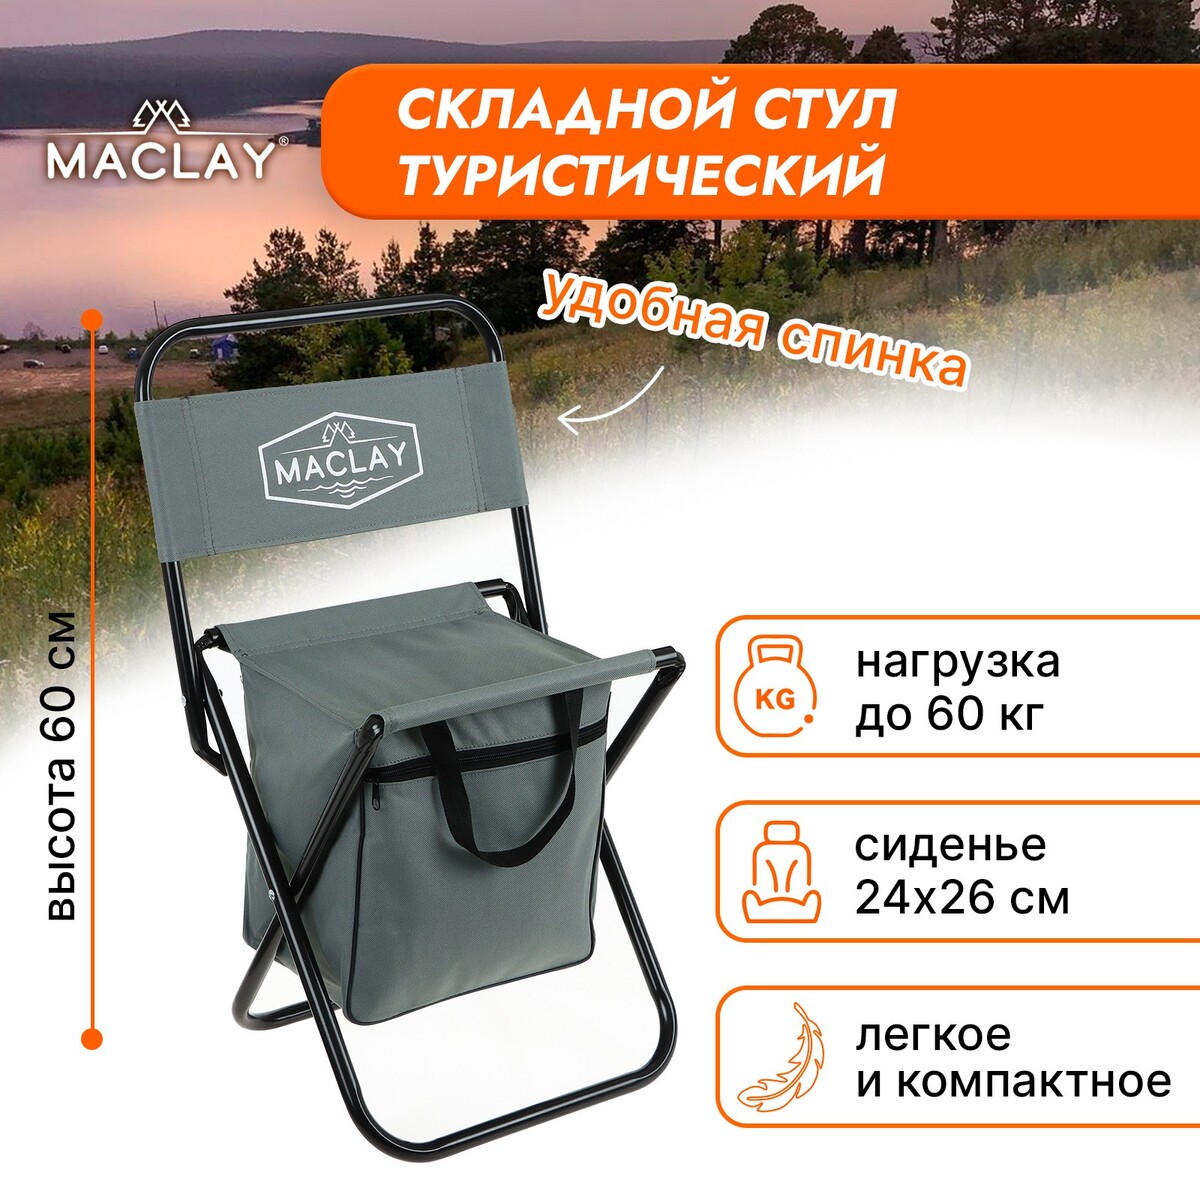 Стул туристический maclay, с сумкой, р. 24х26х60 см, до 60 кг, цвет серый стул туристический maclay с сумкой р 24х26х60 см до 60 кг серый